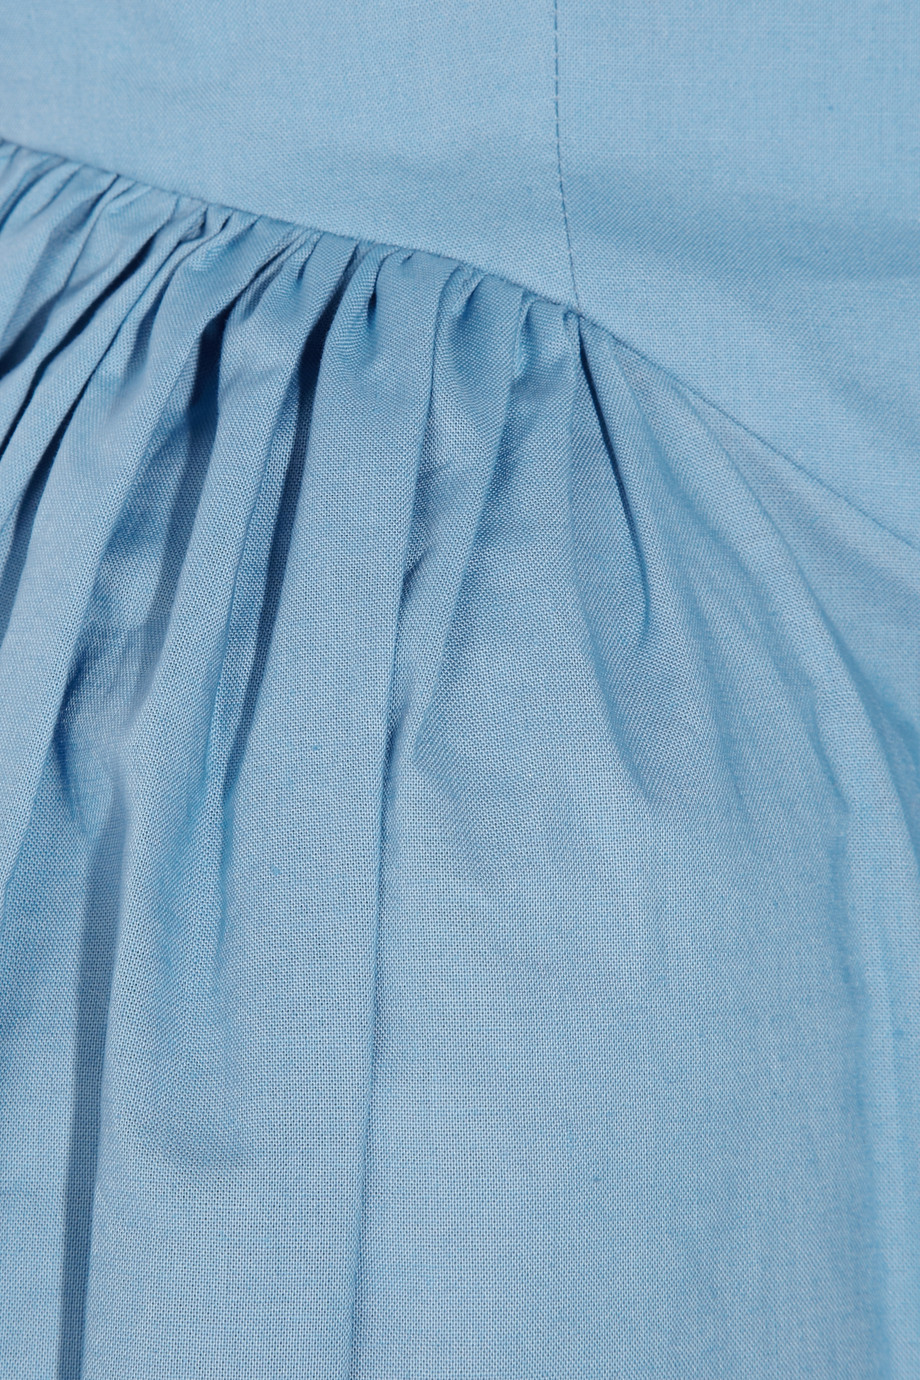 Lyst - Vivienne Westwood Anglomania Pannier Cotton Dress in Blue